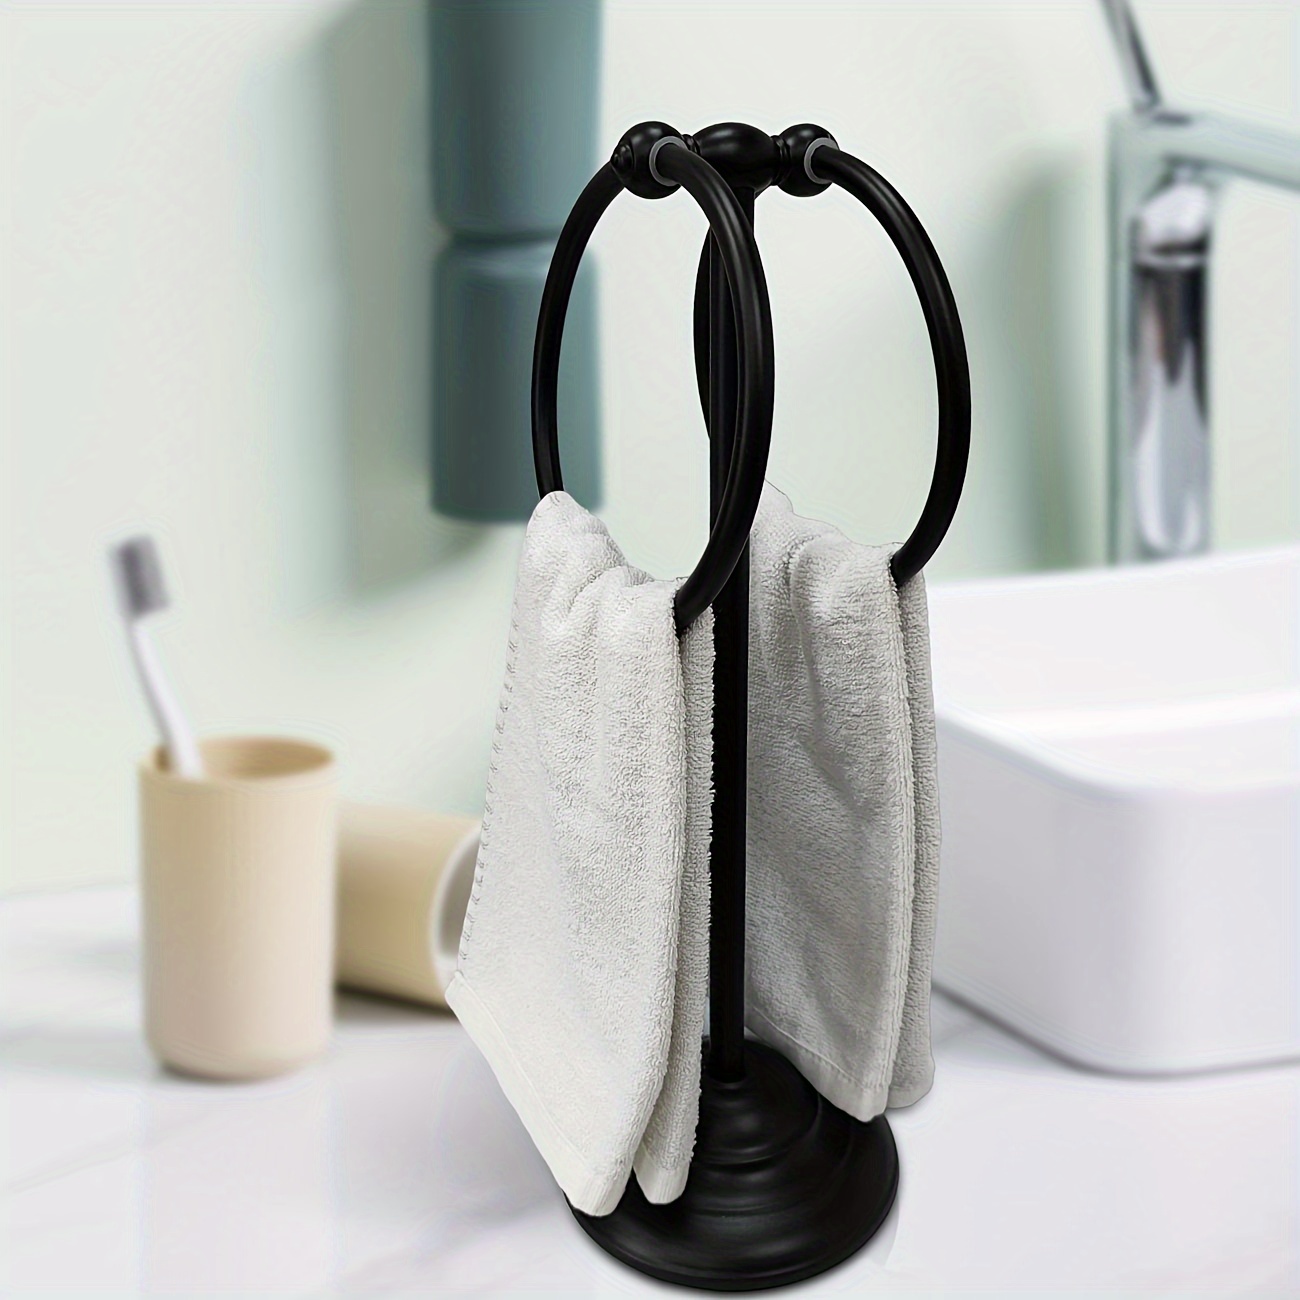 Towel Ring, Hand Towel Holder, Towel Rack, Bath Decor, Towel Rack